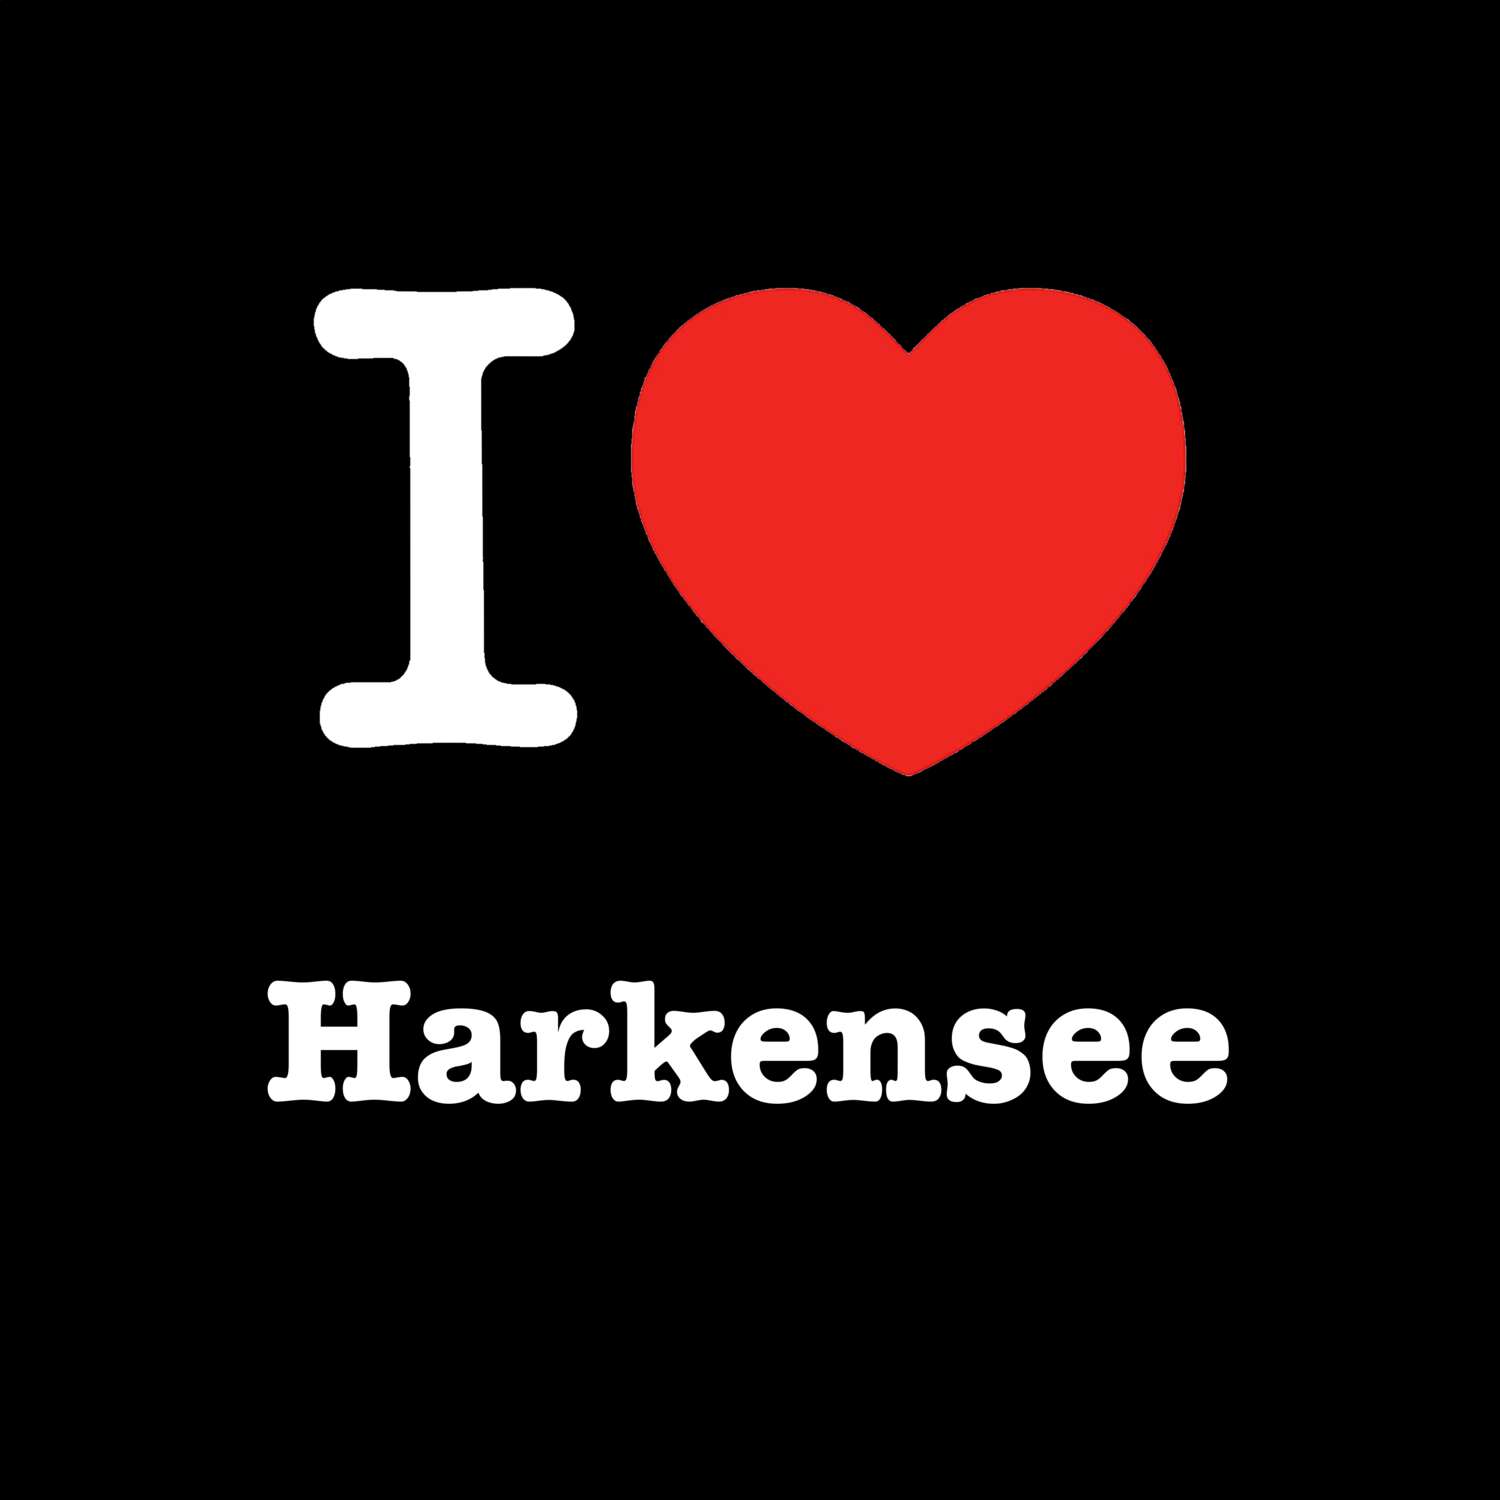 Harkensee T-Shirt »I love«